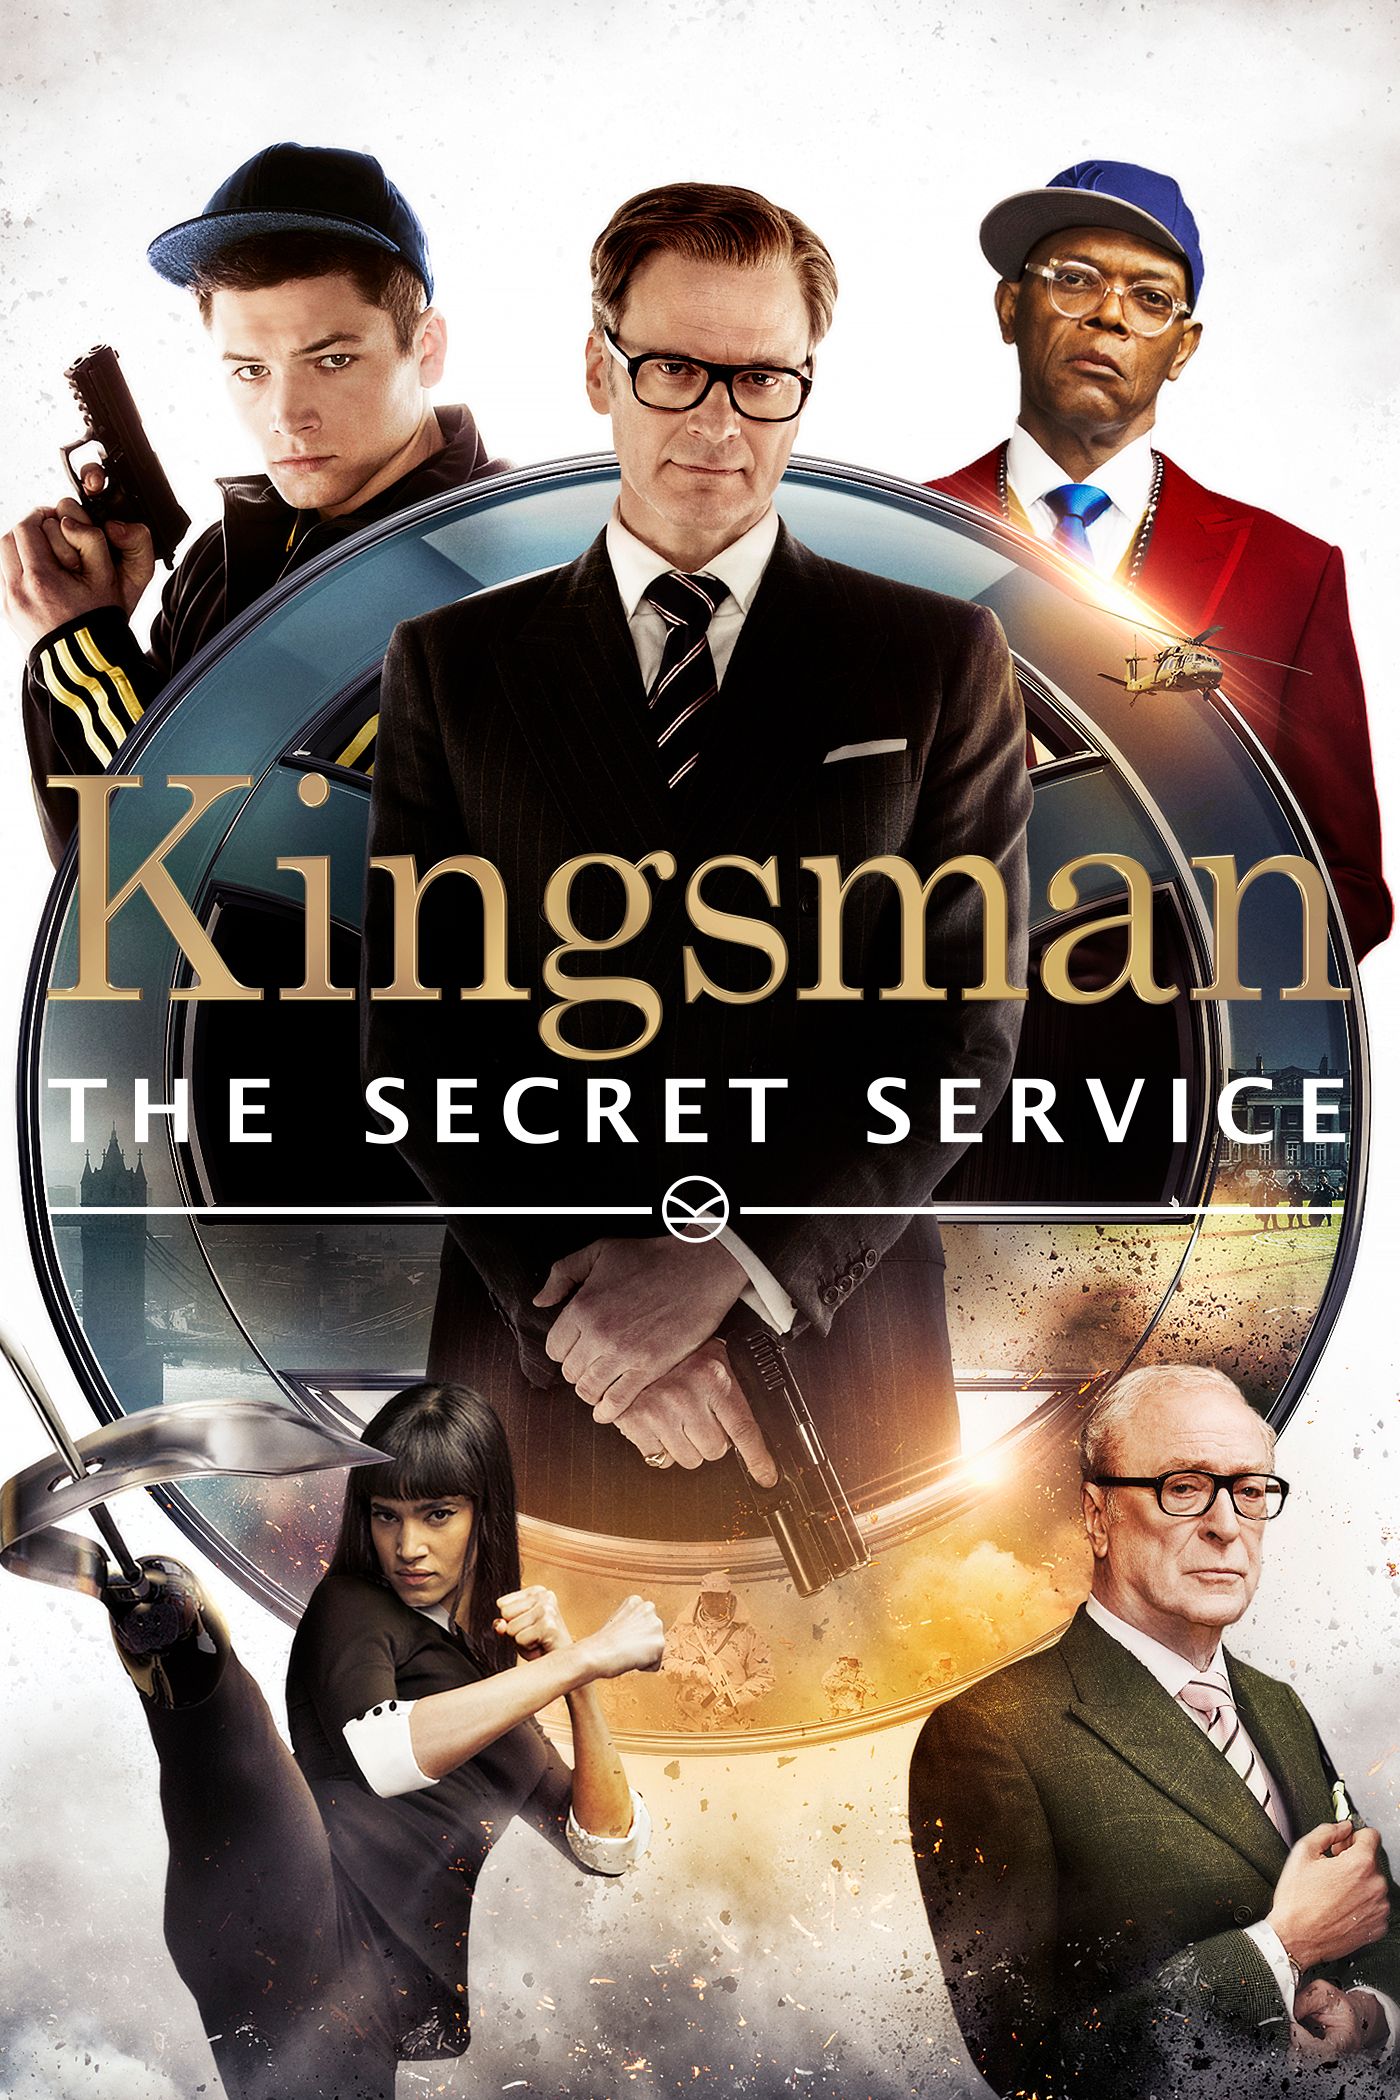 watch kingsman 2 english online free